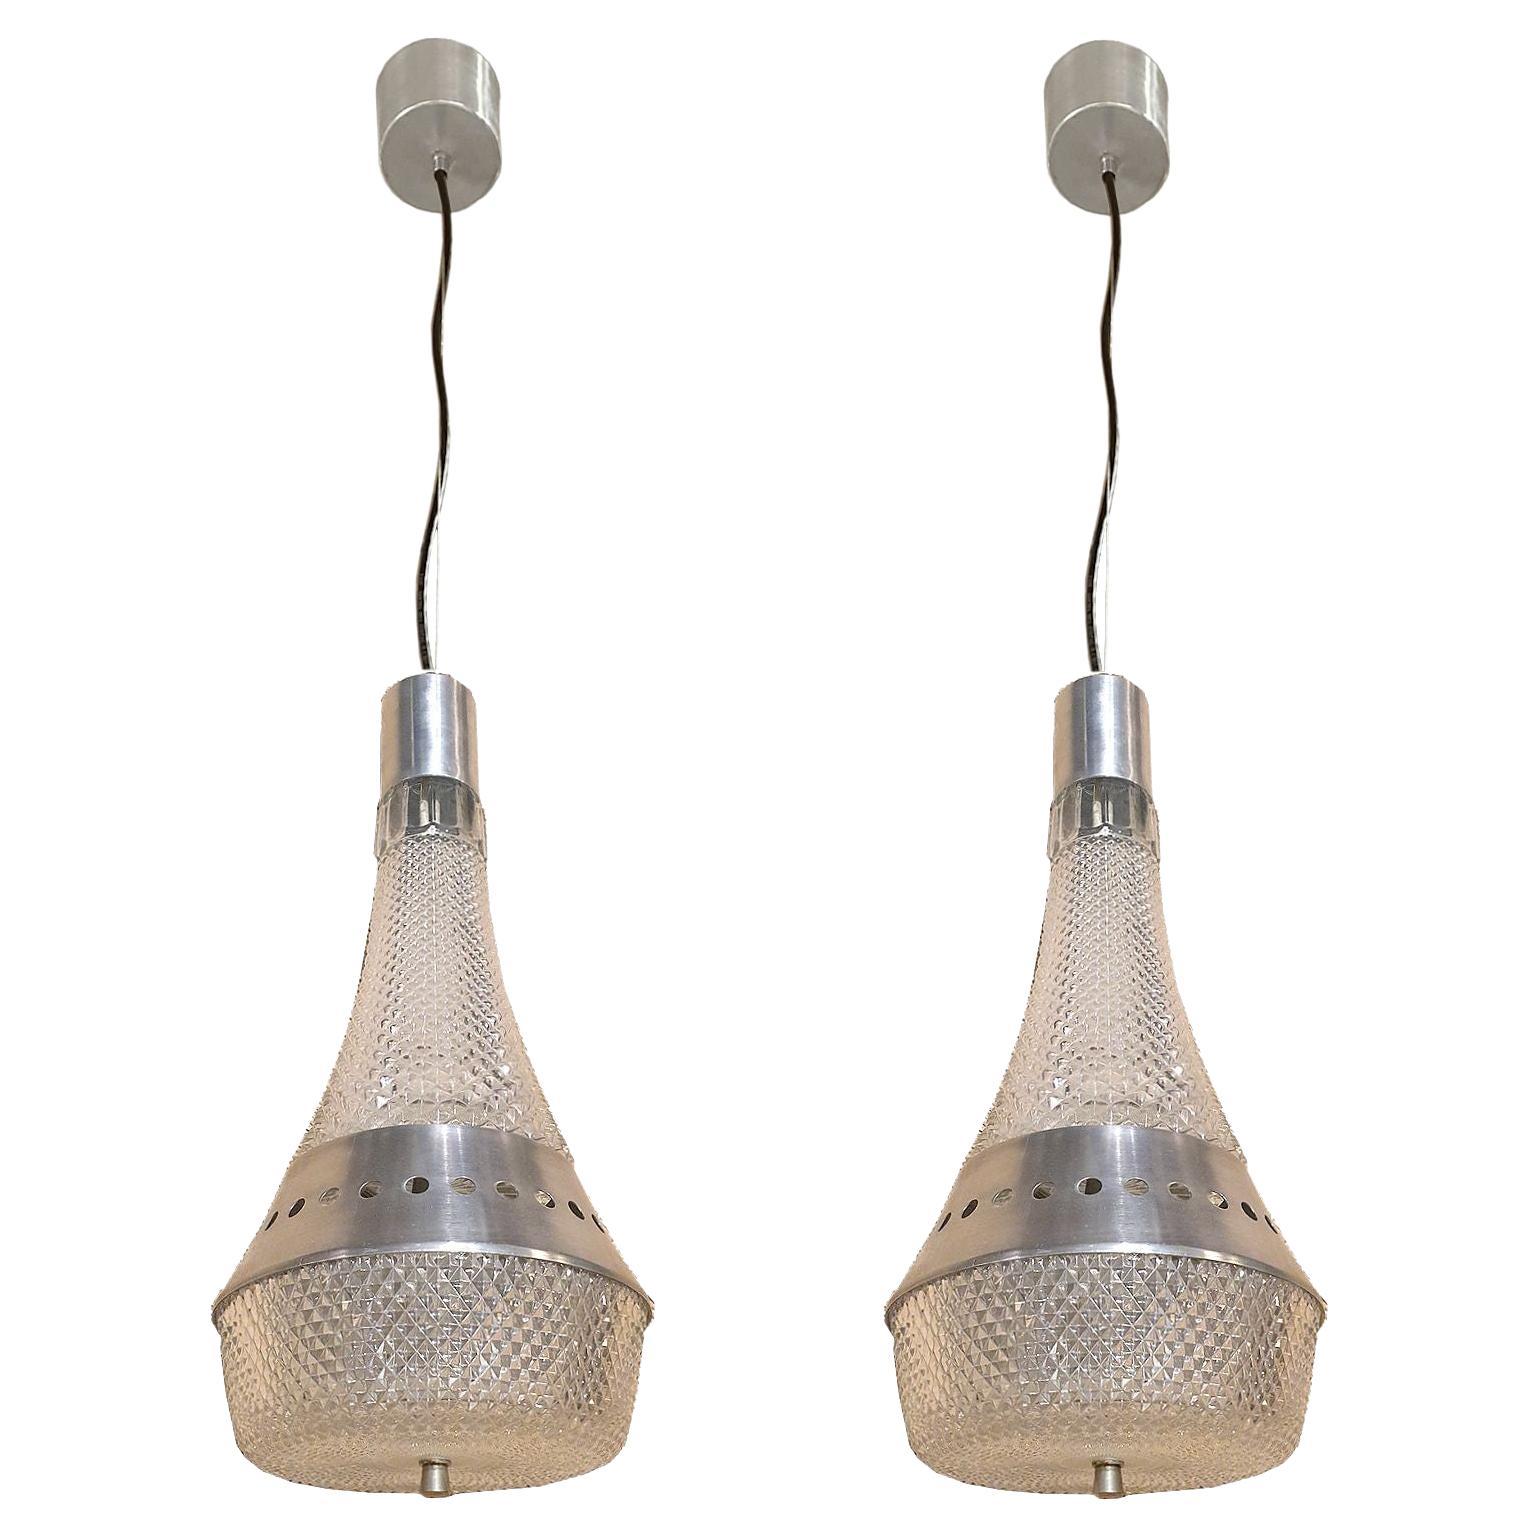 Italian Pendant ceiling Lights - A pair